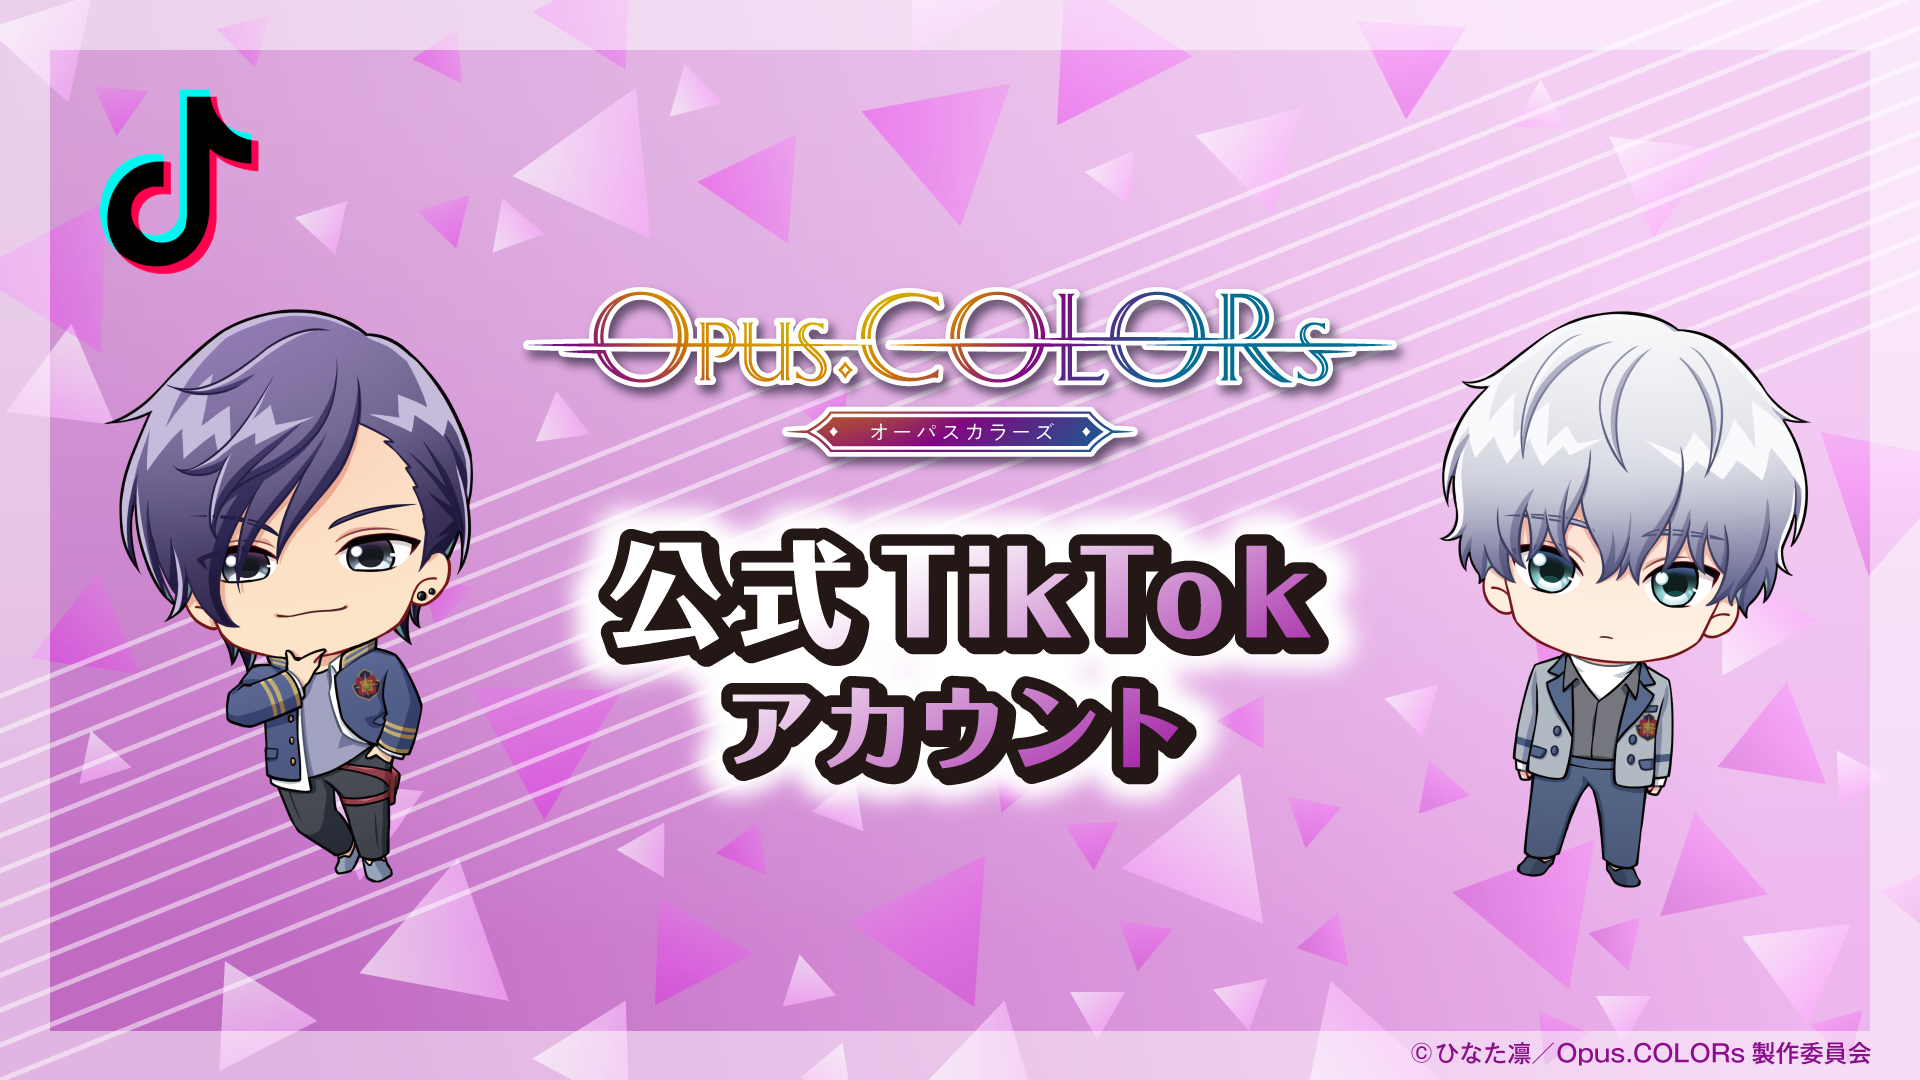 opus-colors OFFICIAL TikTok ACCOUNT